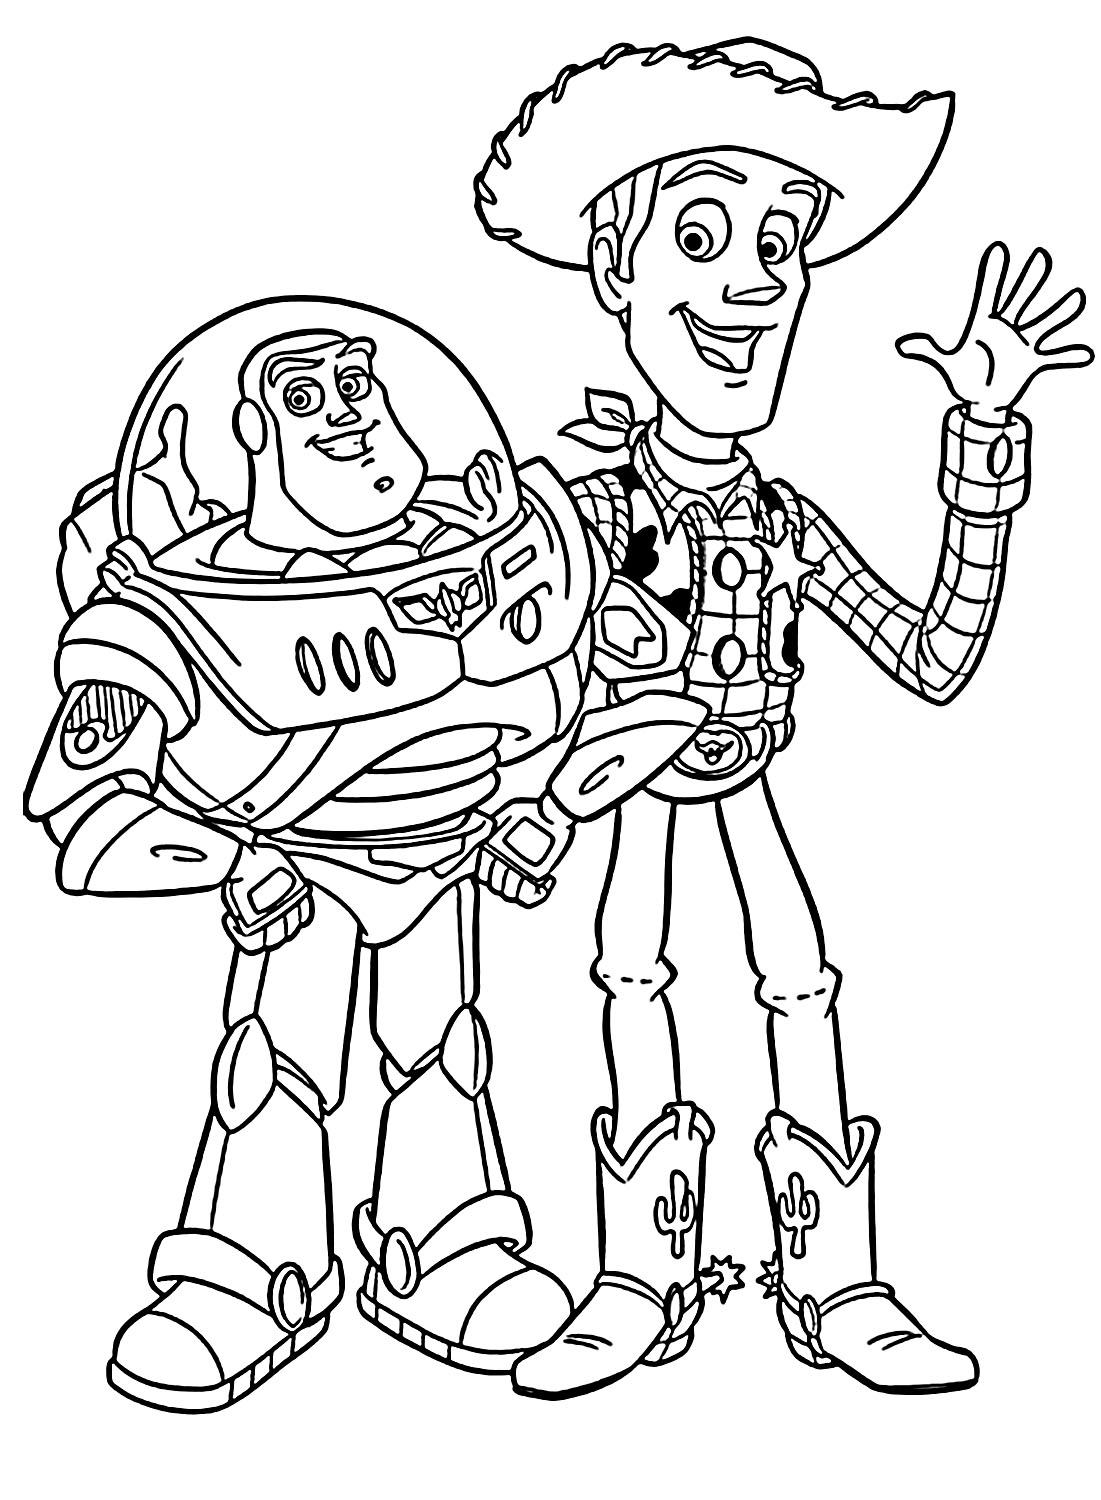 Woody et Buzz de Toy Story